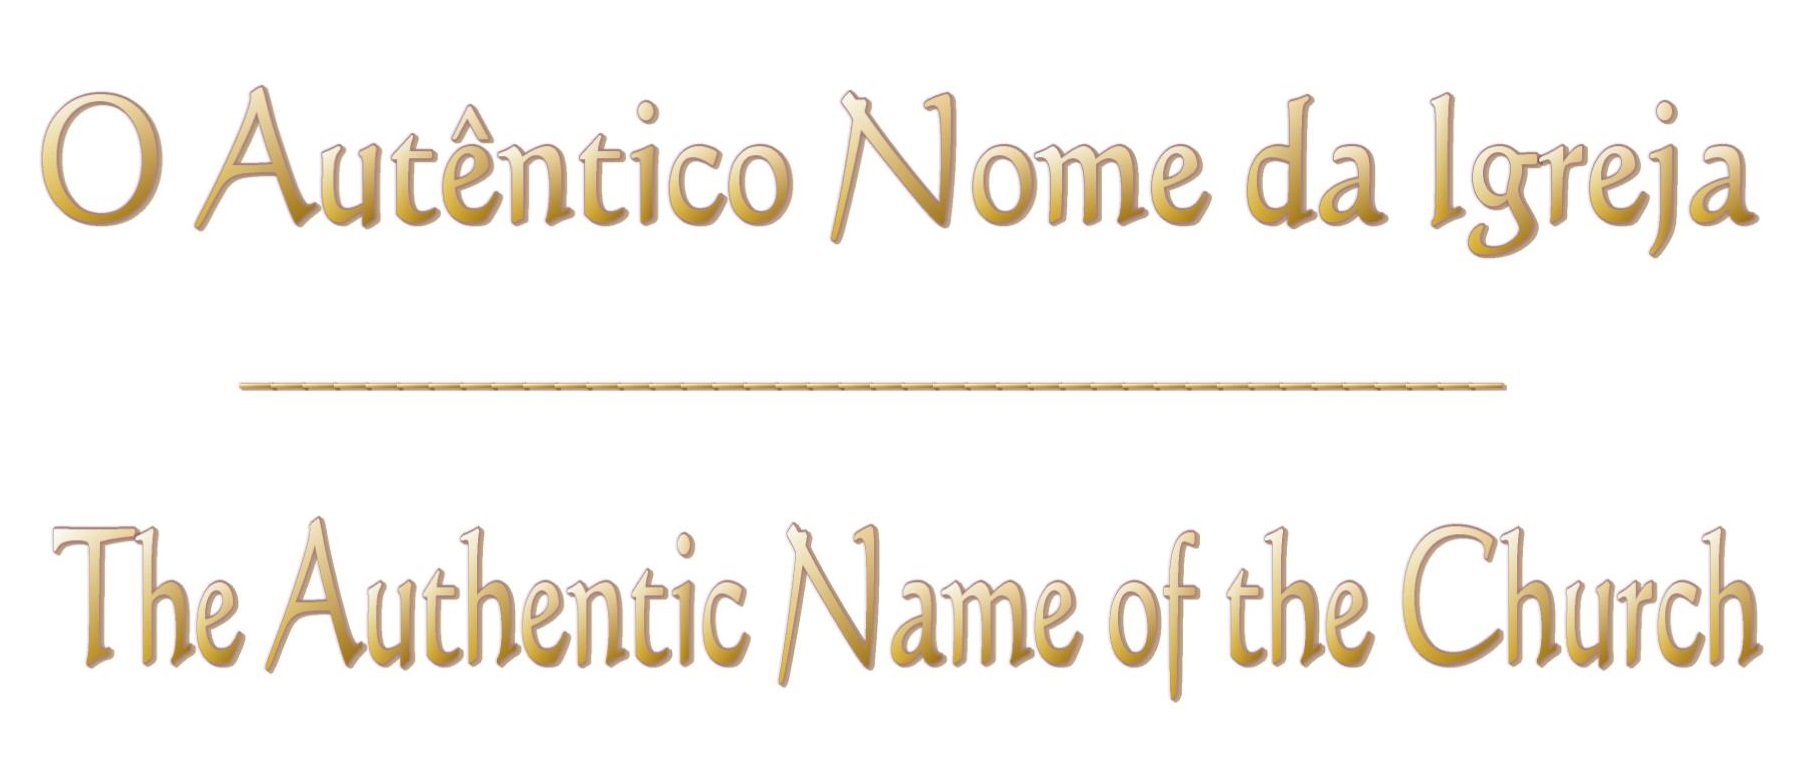 The Authentic Name of the Church | O Autêntico Nome da Igreja